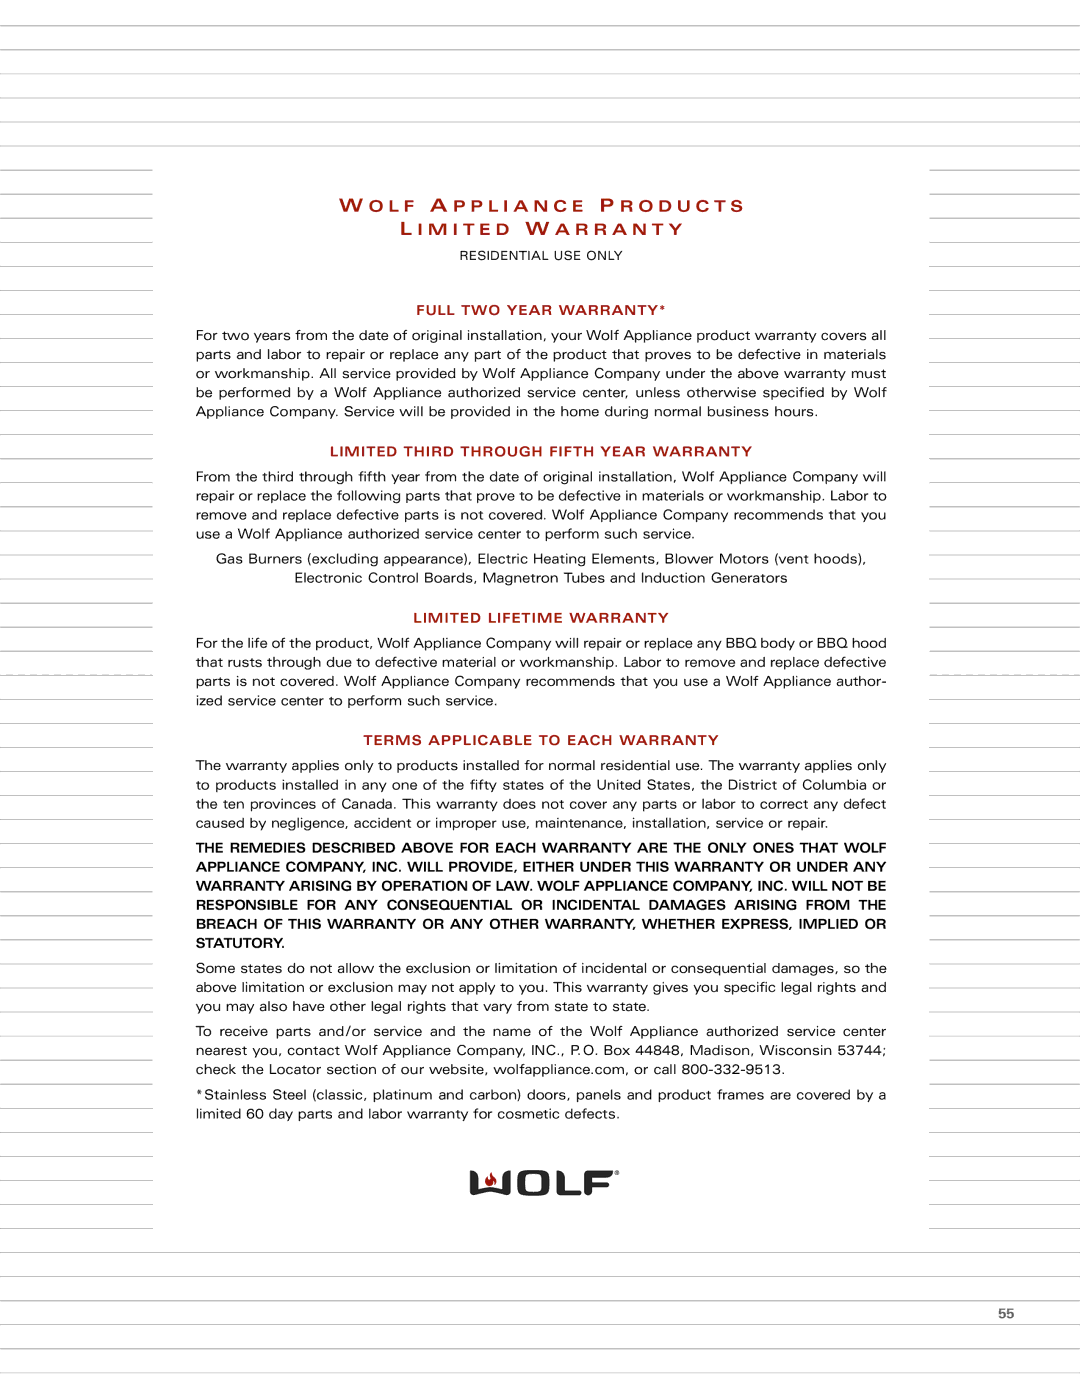 Wolf Appliance Company DF484CG manual Full TWO Year Warranty 